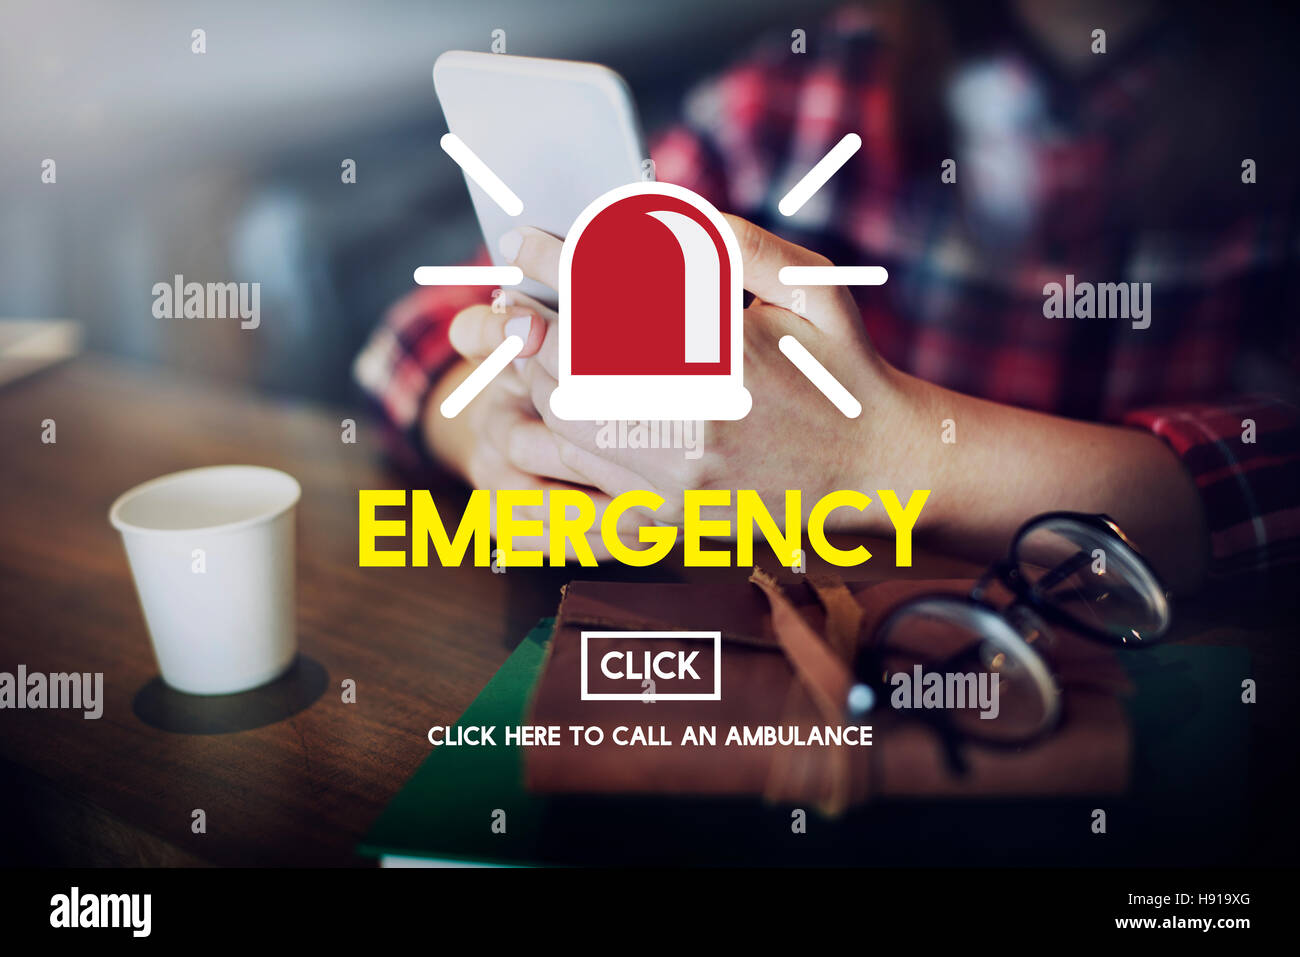 Emergency Service Ambulance Hospital Care Concept Stock Photo